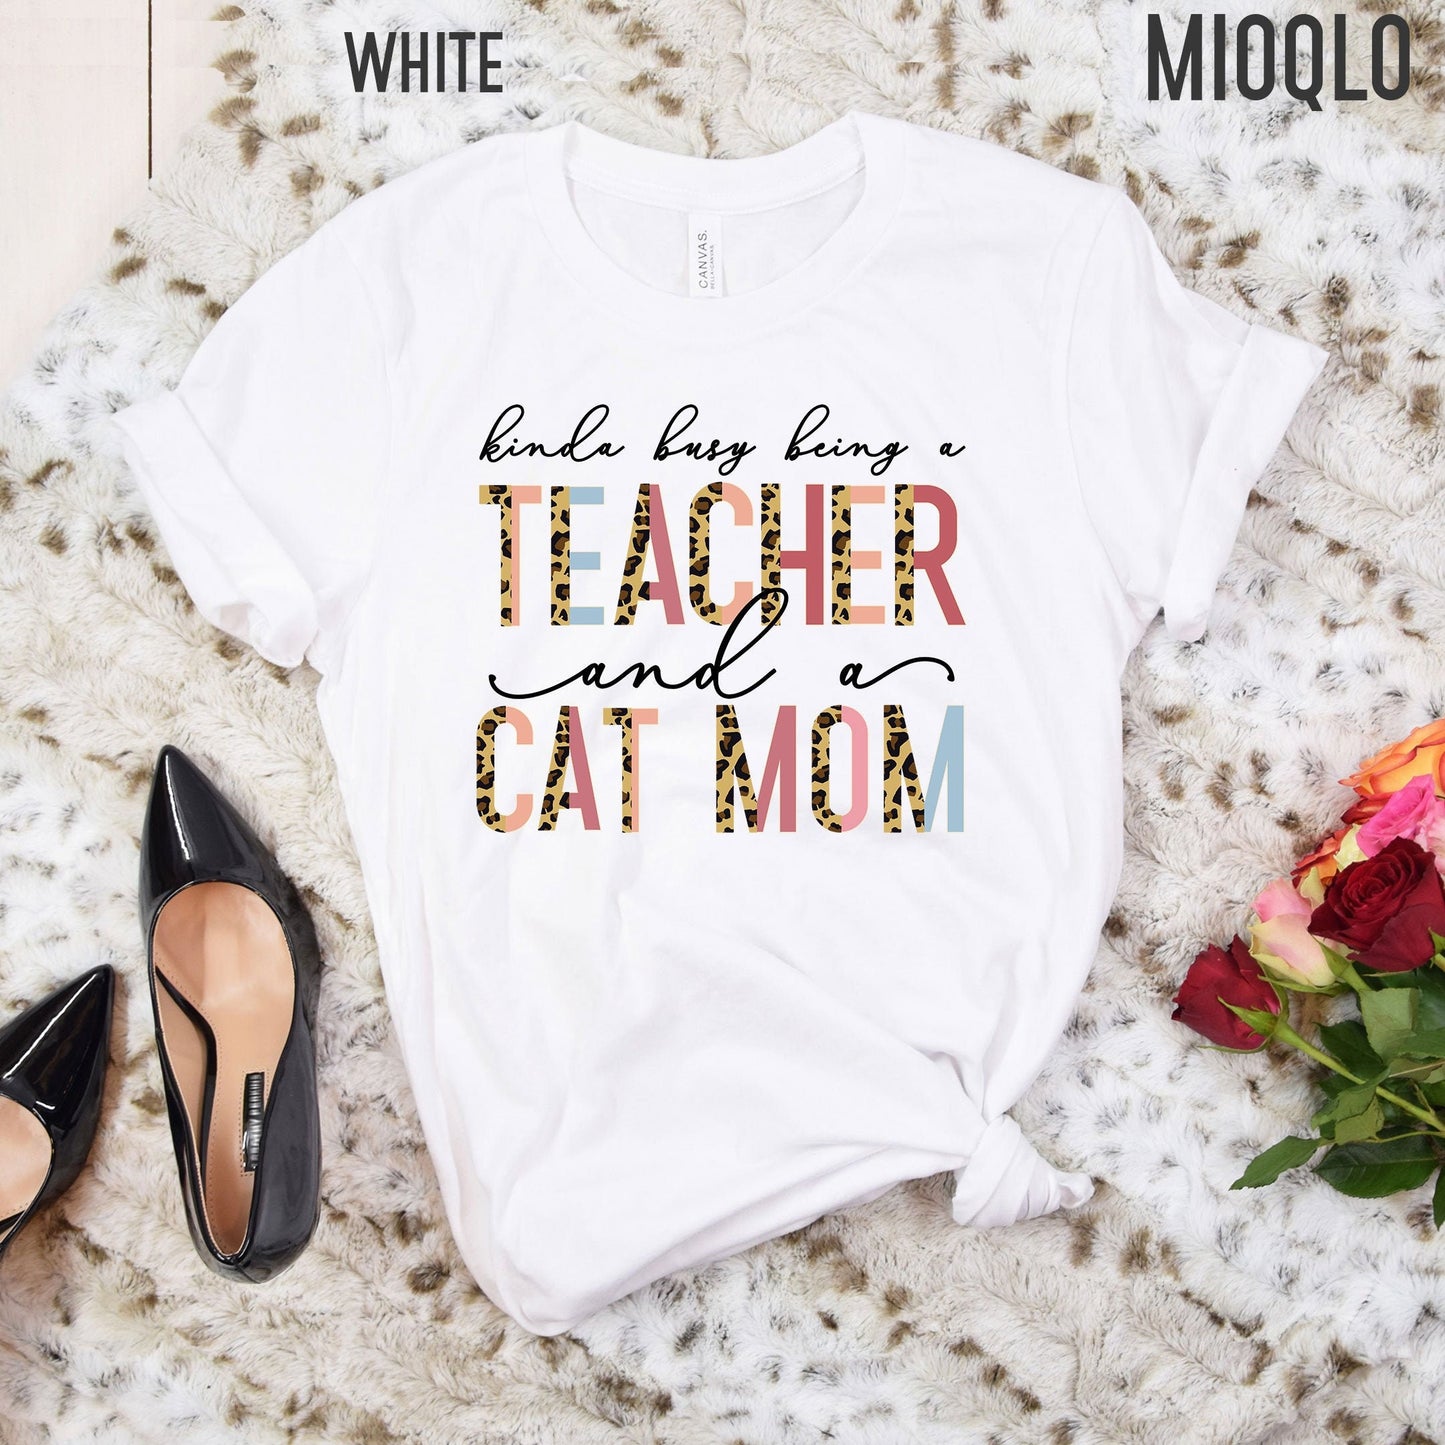 Kinda Busy With Being A Teacher And A Cat Mom Shirt, Teacher Tee, Cat Lover Tee, Animal Lover, Kind of, Half Leopard Teacher Appreciation